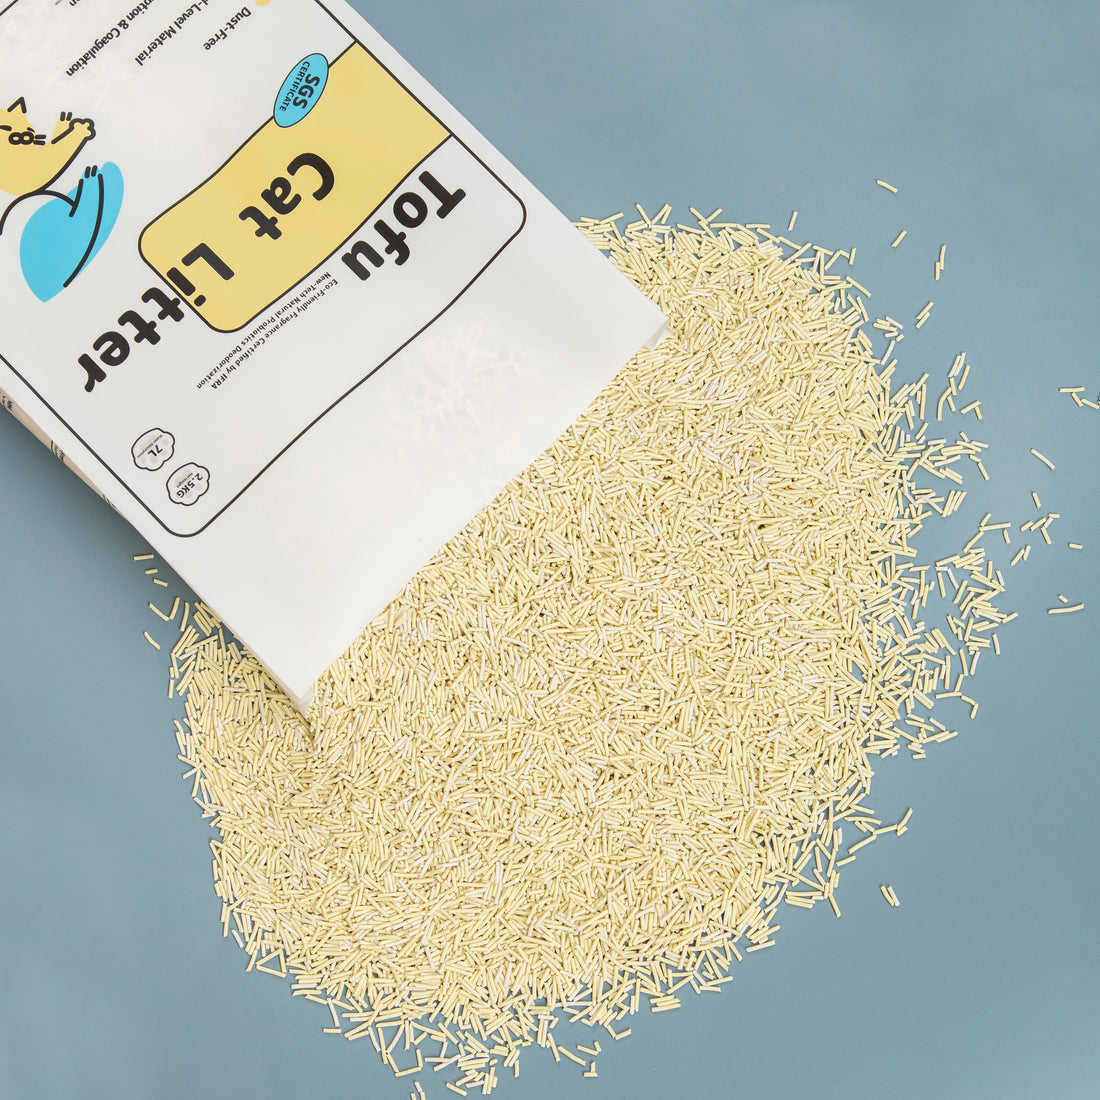 【Minimal OS】Probiotics Tofu Cat Litter 1 Case / 6 Bags